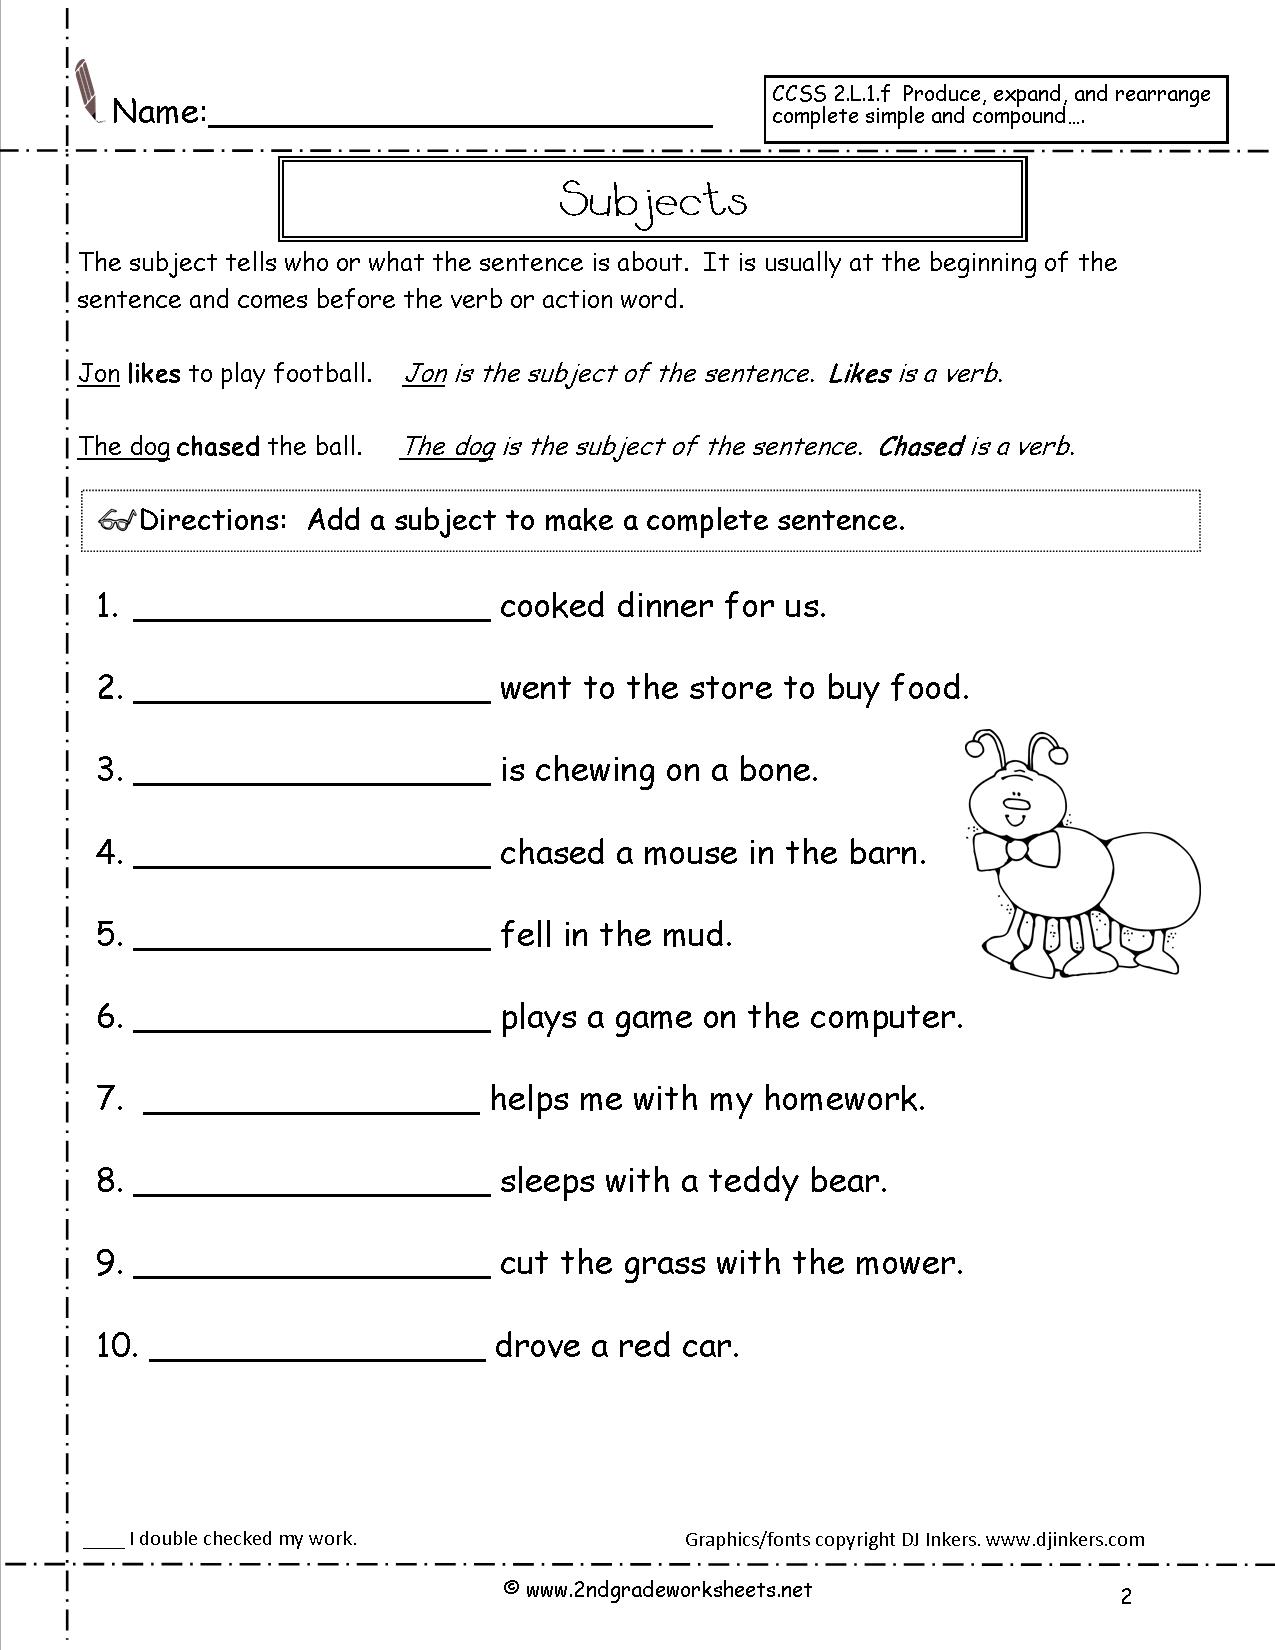 Worksheet On Types Of Sentences Grade 3